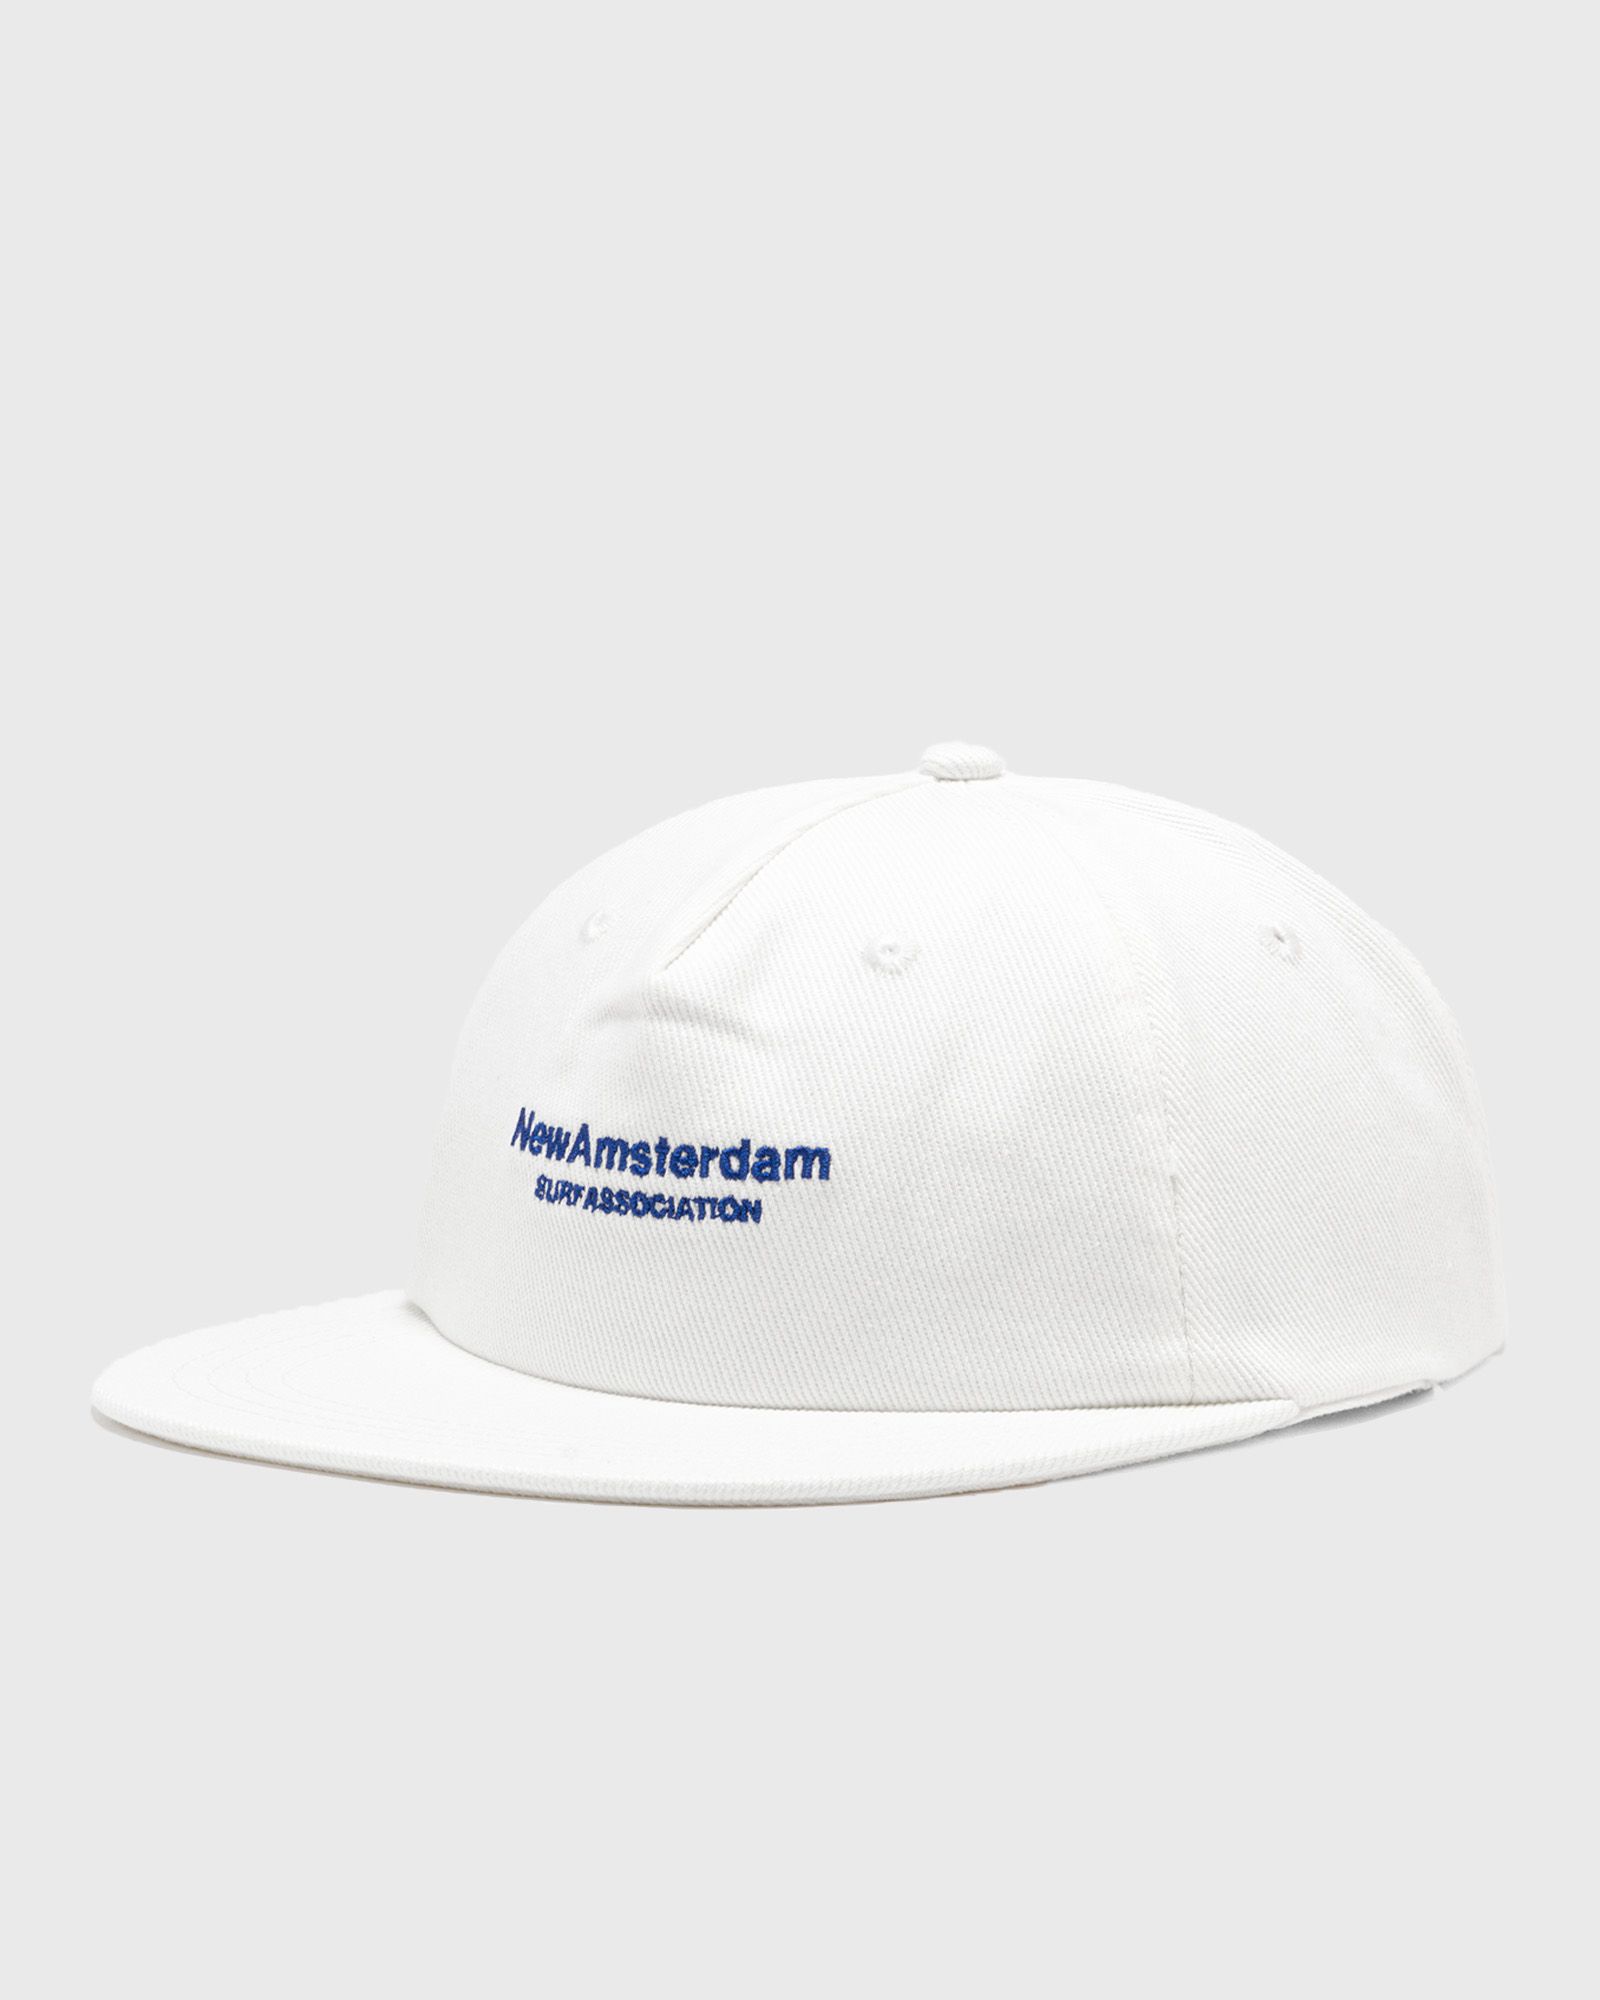 New Amsterdam - name cap men caps white in größe:one size